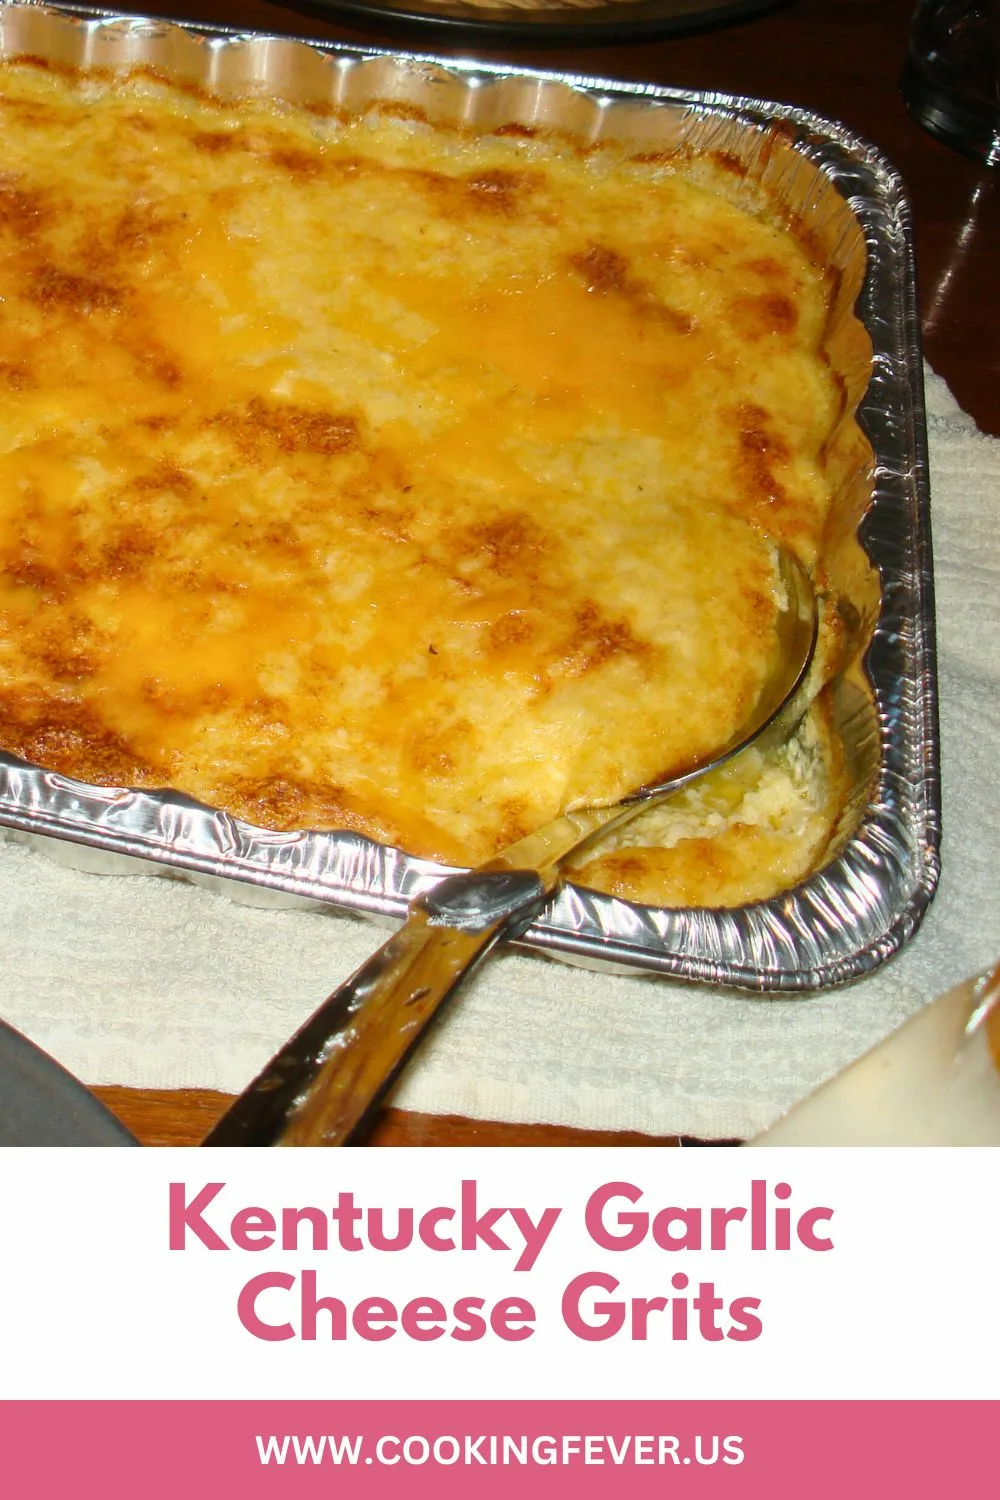 Kentucky Garlic Cheese Grits